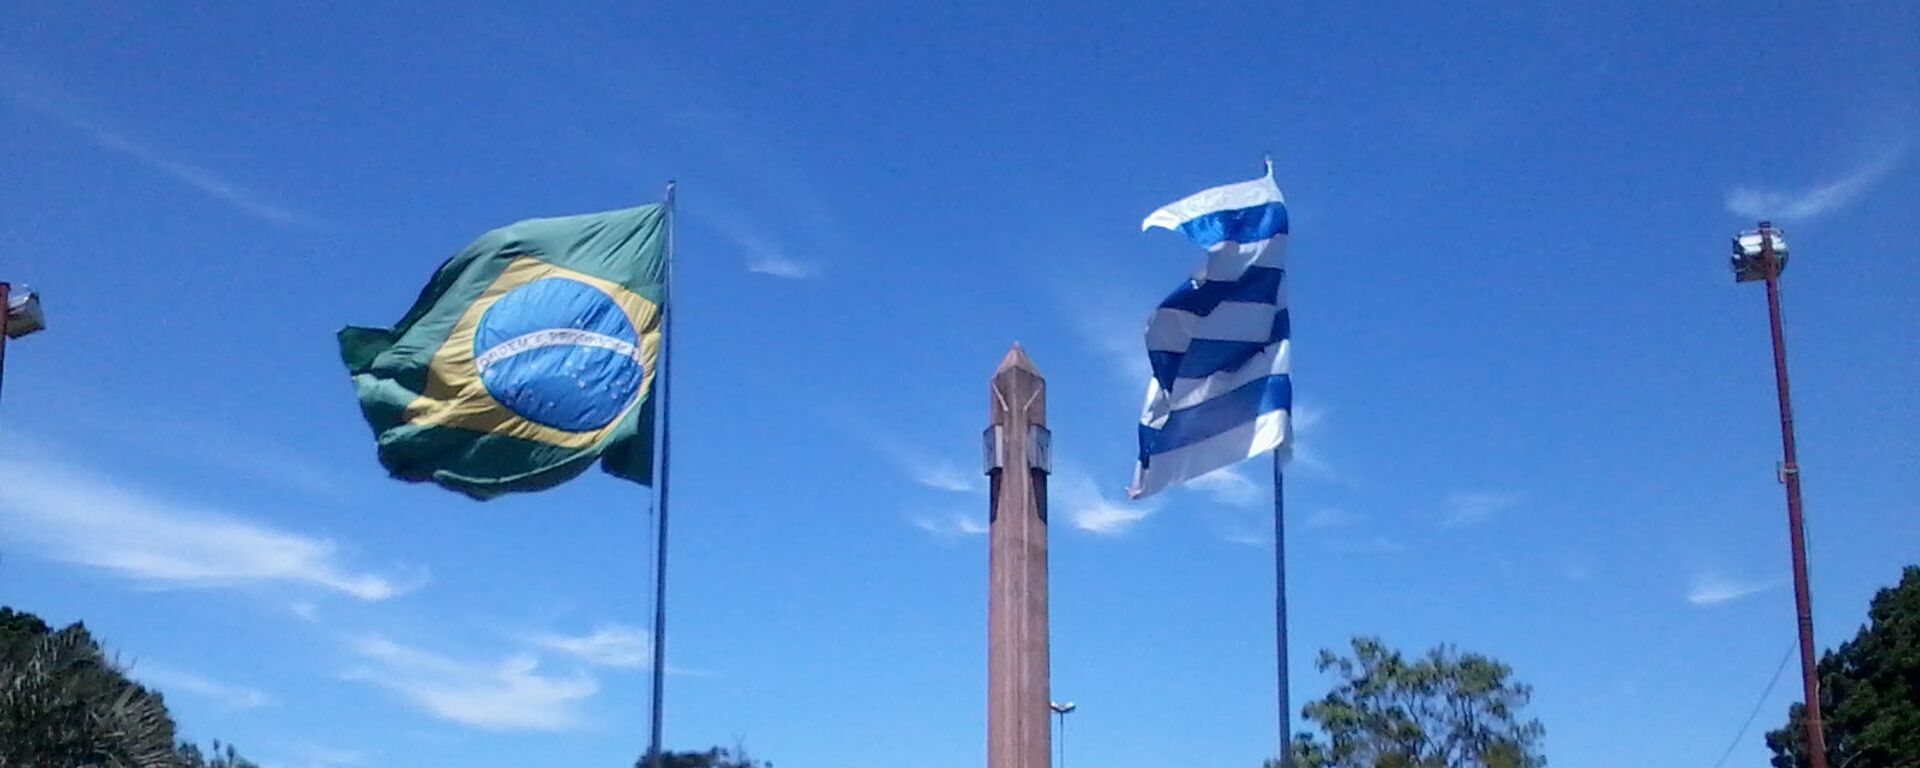 Frontera de la Paz entre Uruguay y Brasil, plaza internacional de Rivera-Santana do Livramento. - Sputnik Mundo, 1920, 22.06.2021